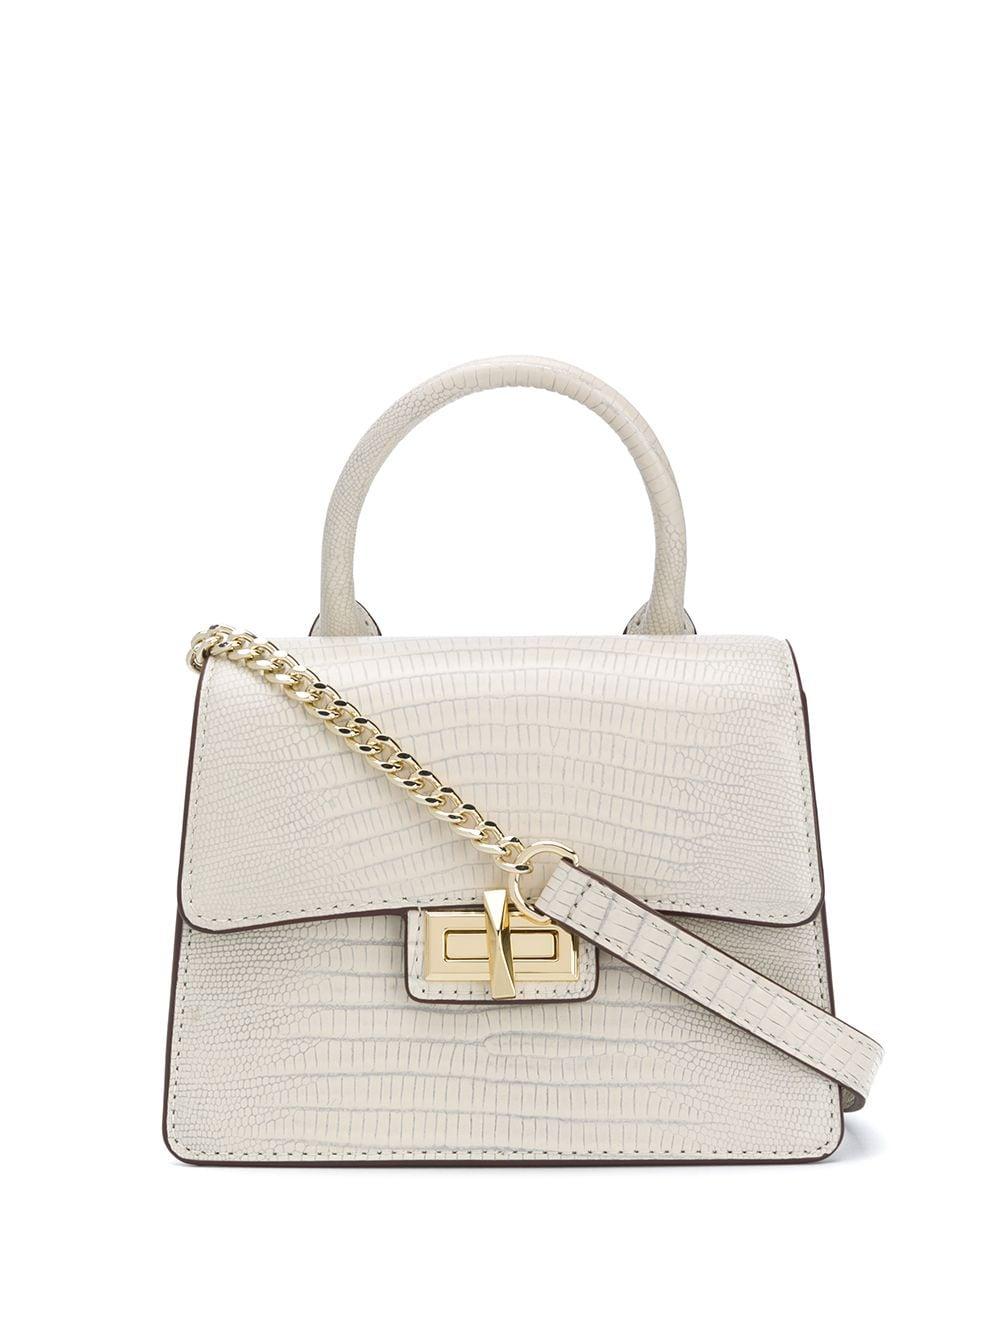 DKNY Leather Jojo Mini Bag in White - Save 3% - Lyst